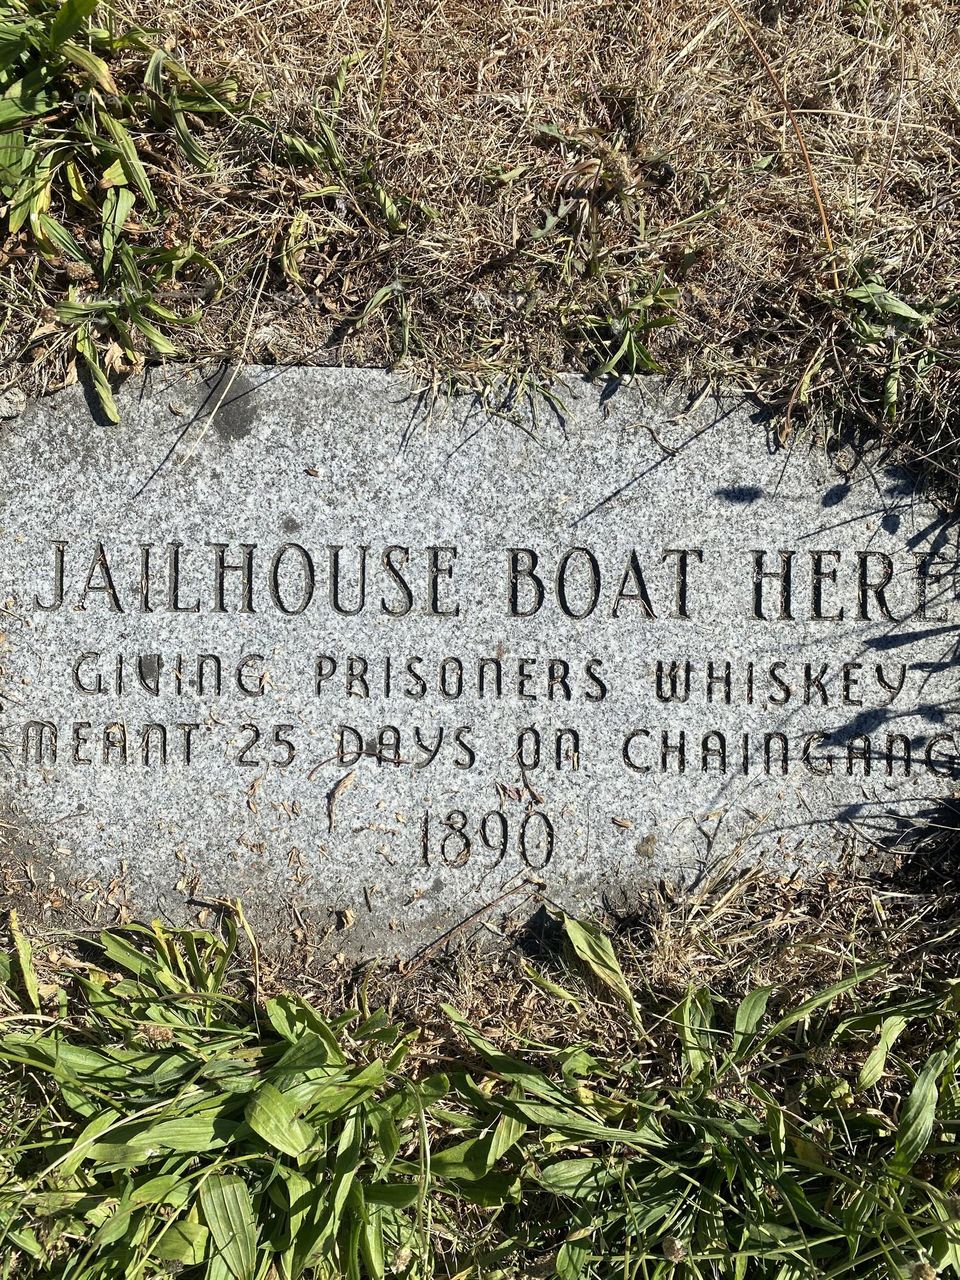 Jailhouse boat 